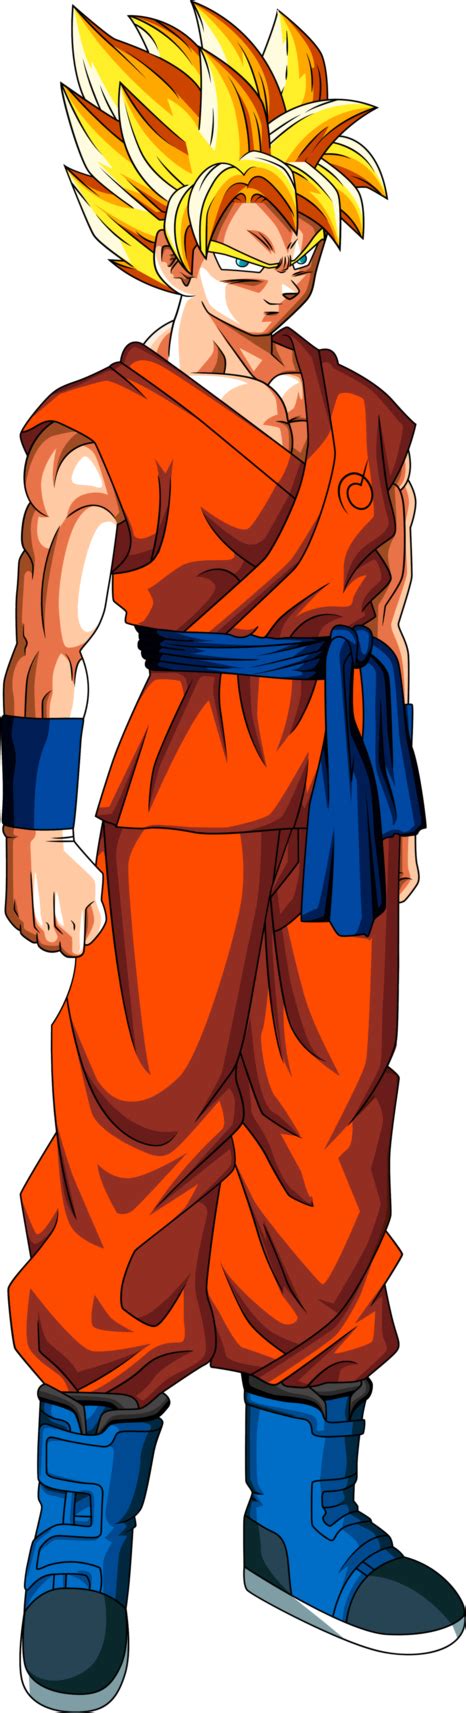 Imagen Goku Ssj1 Dbspng Dragon Ball Fanon Wiki